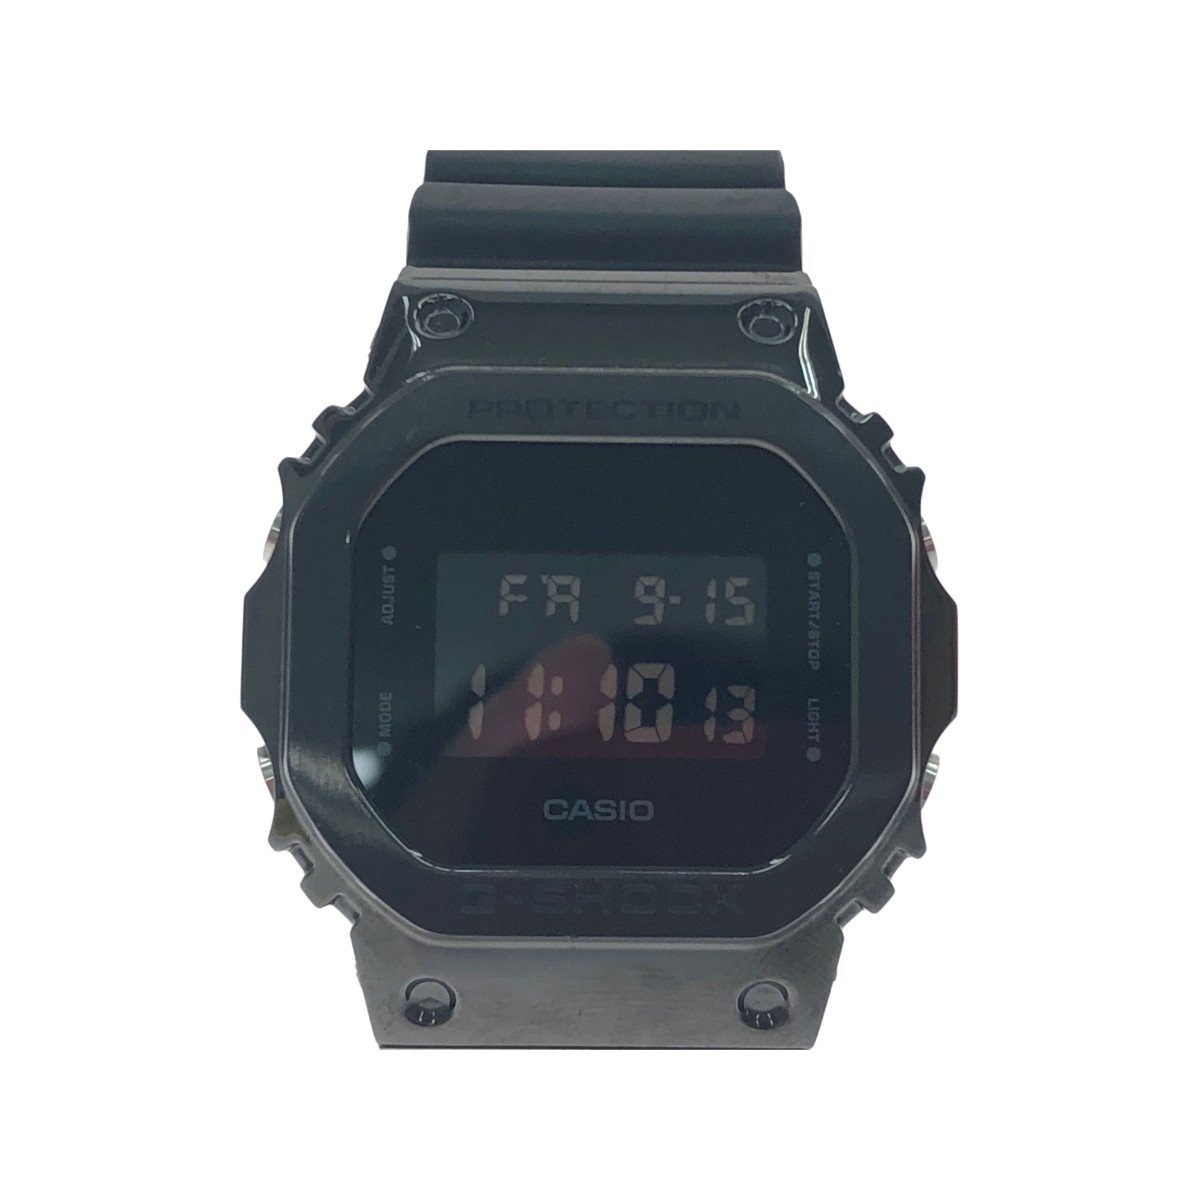 ▼▼ CASIO カシオ メンズ腕時計 クオーツ G-SHOCK Gショック デジタル メタルカバー ラバー スクエアフェイス GM-5600B やや傷や汚れあり